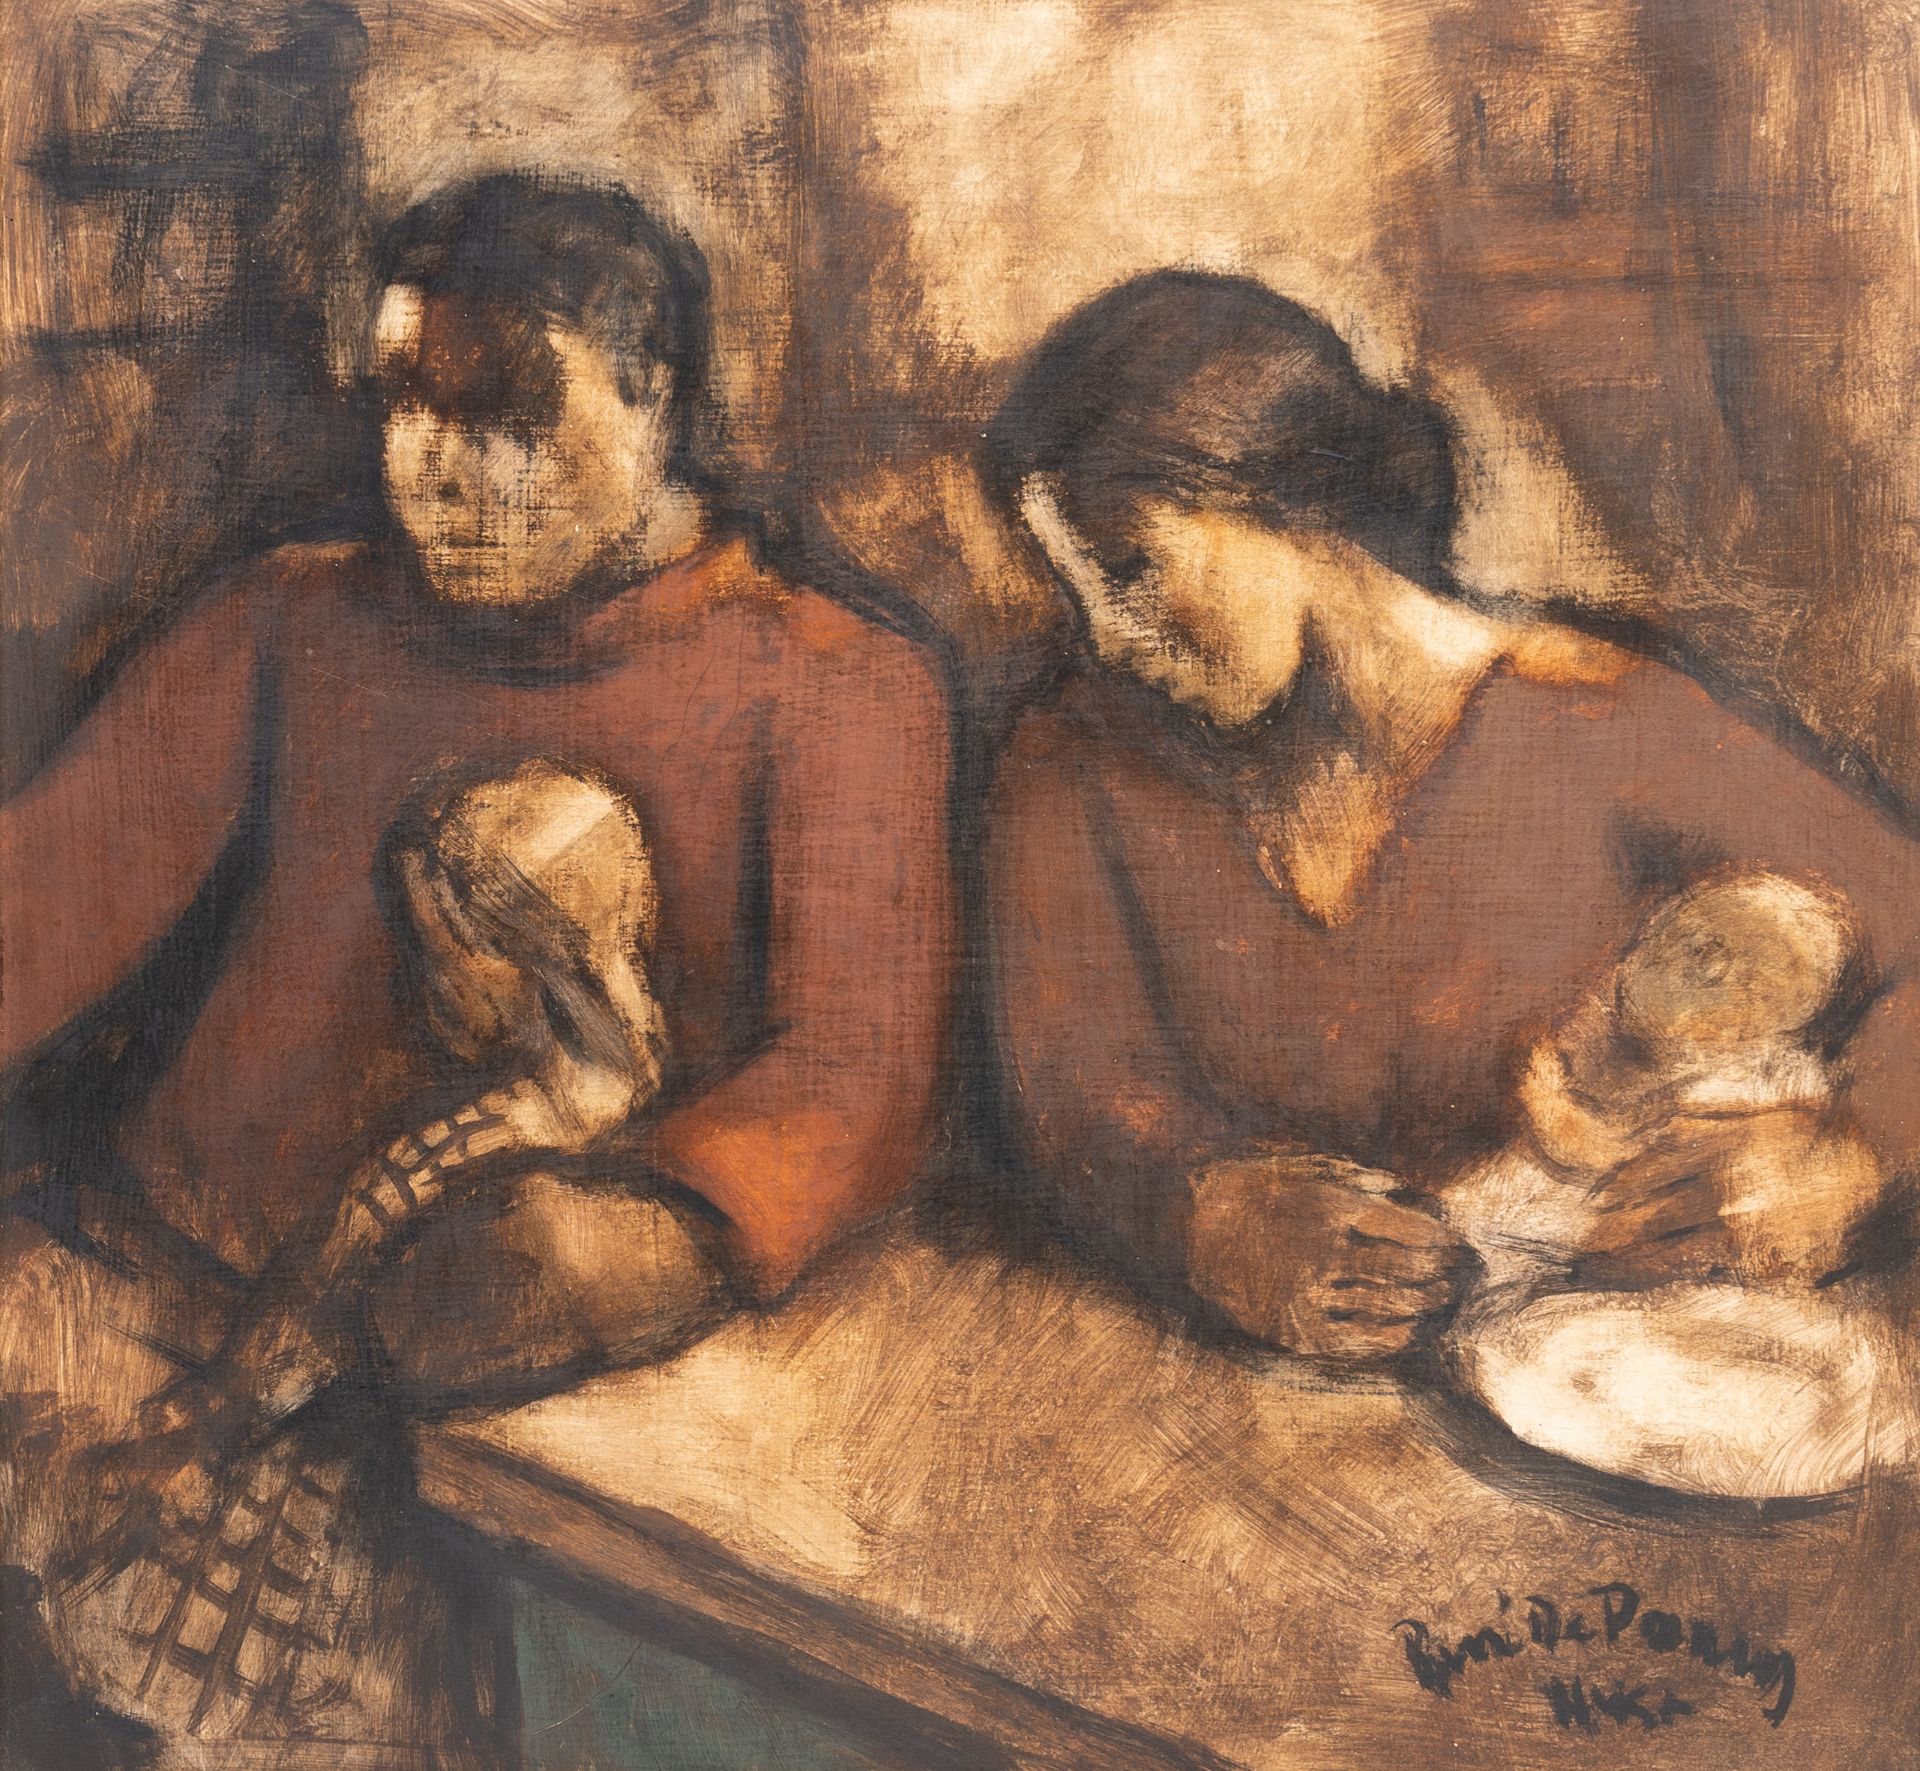 Rene De Pauw (1887-1946): Family life, oil on board